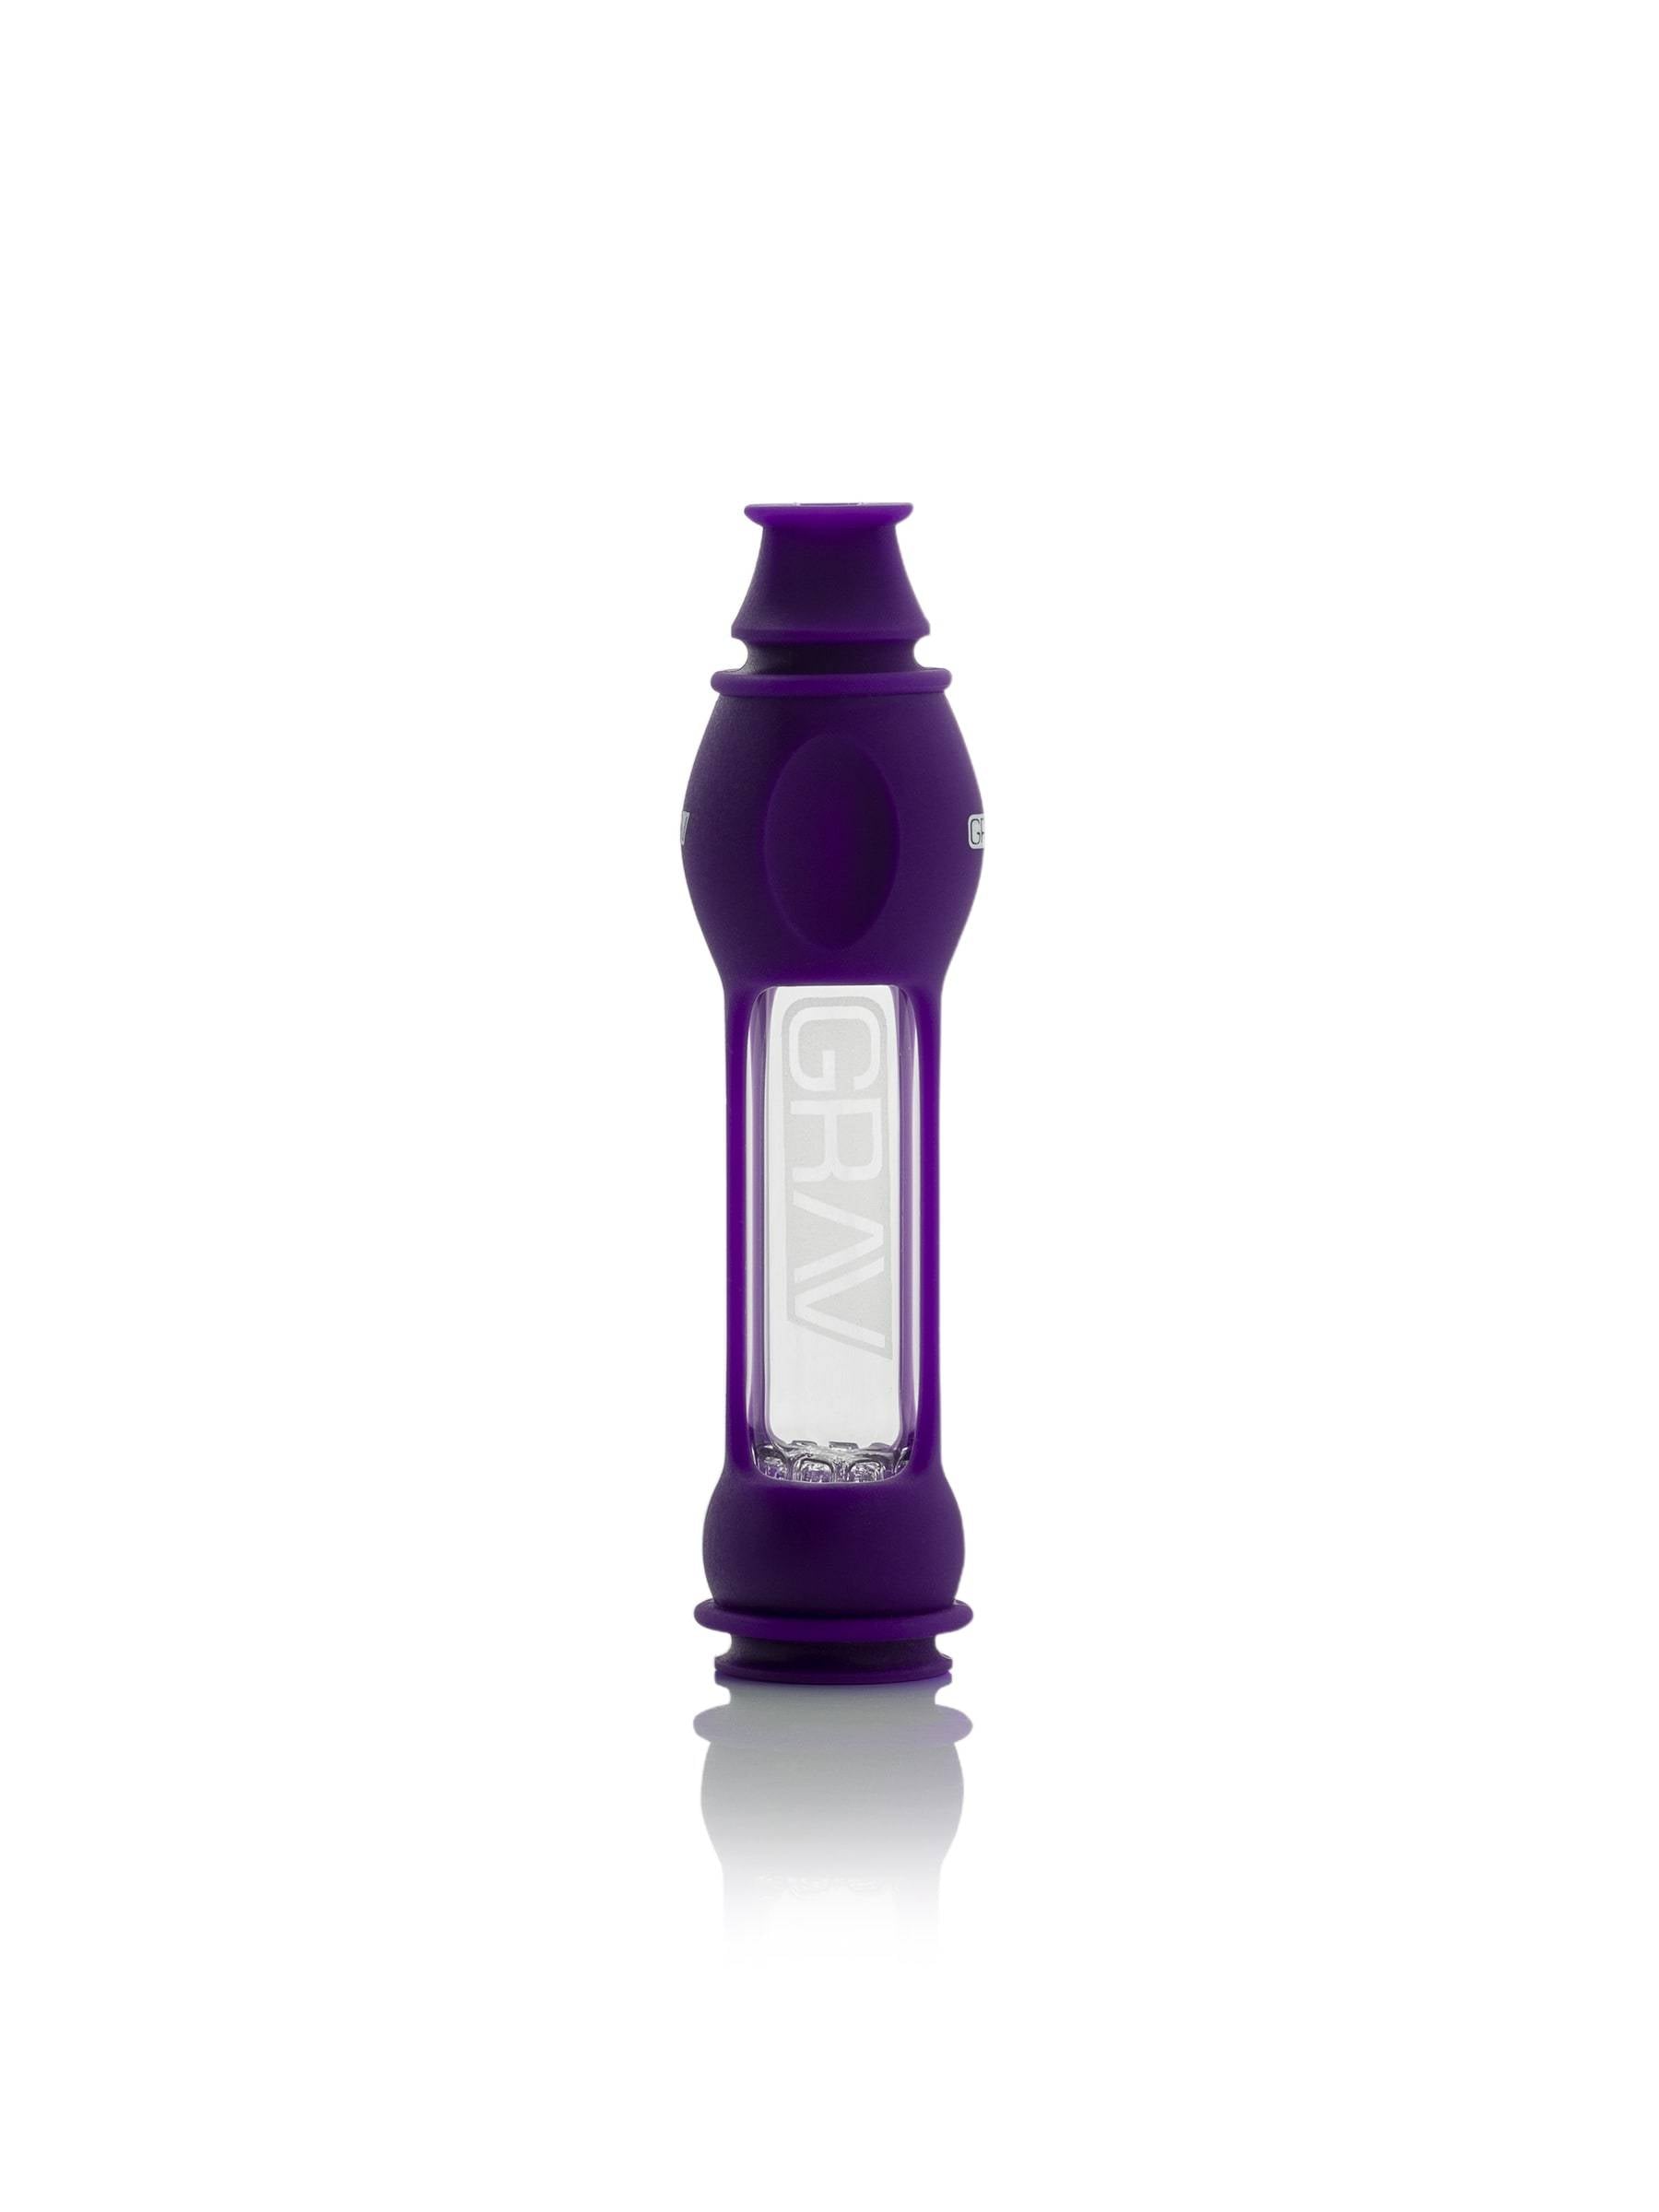 grav labs octo taster pipe 16mm purple silicone